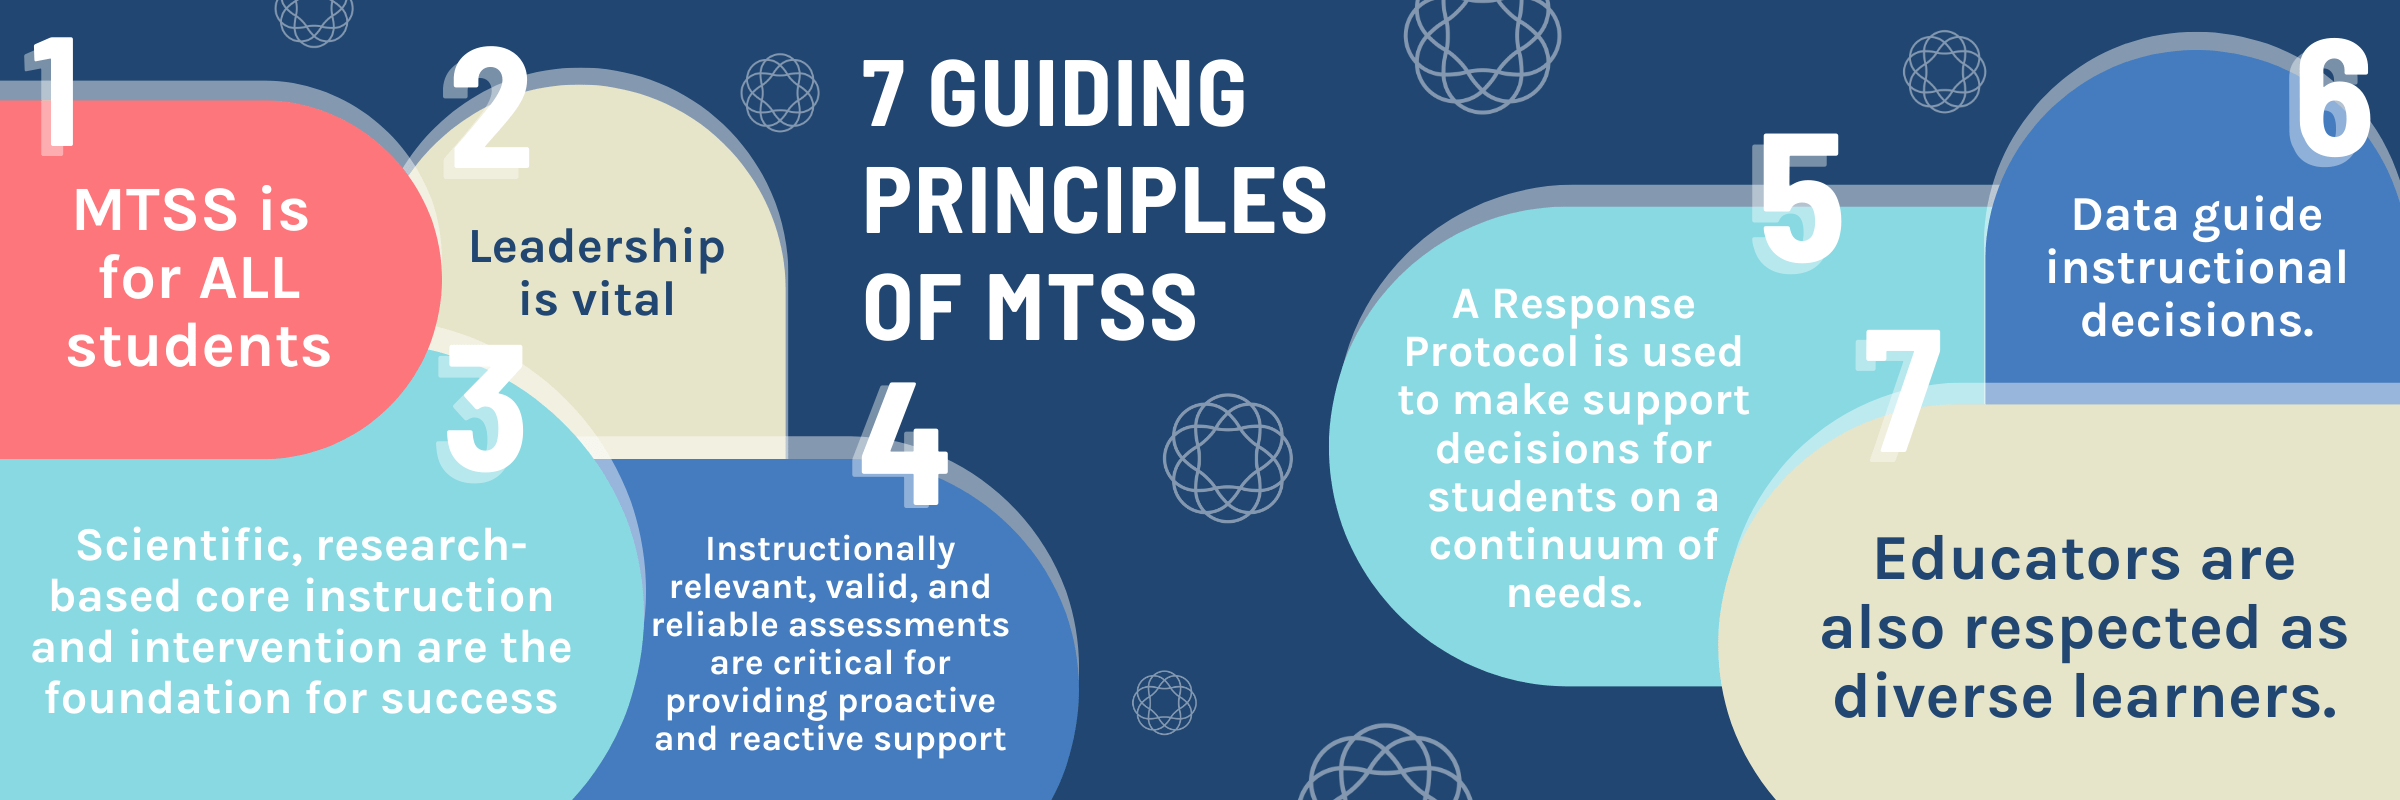 7-guiding-principles-of-mtss-min